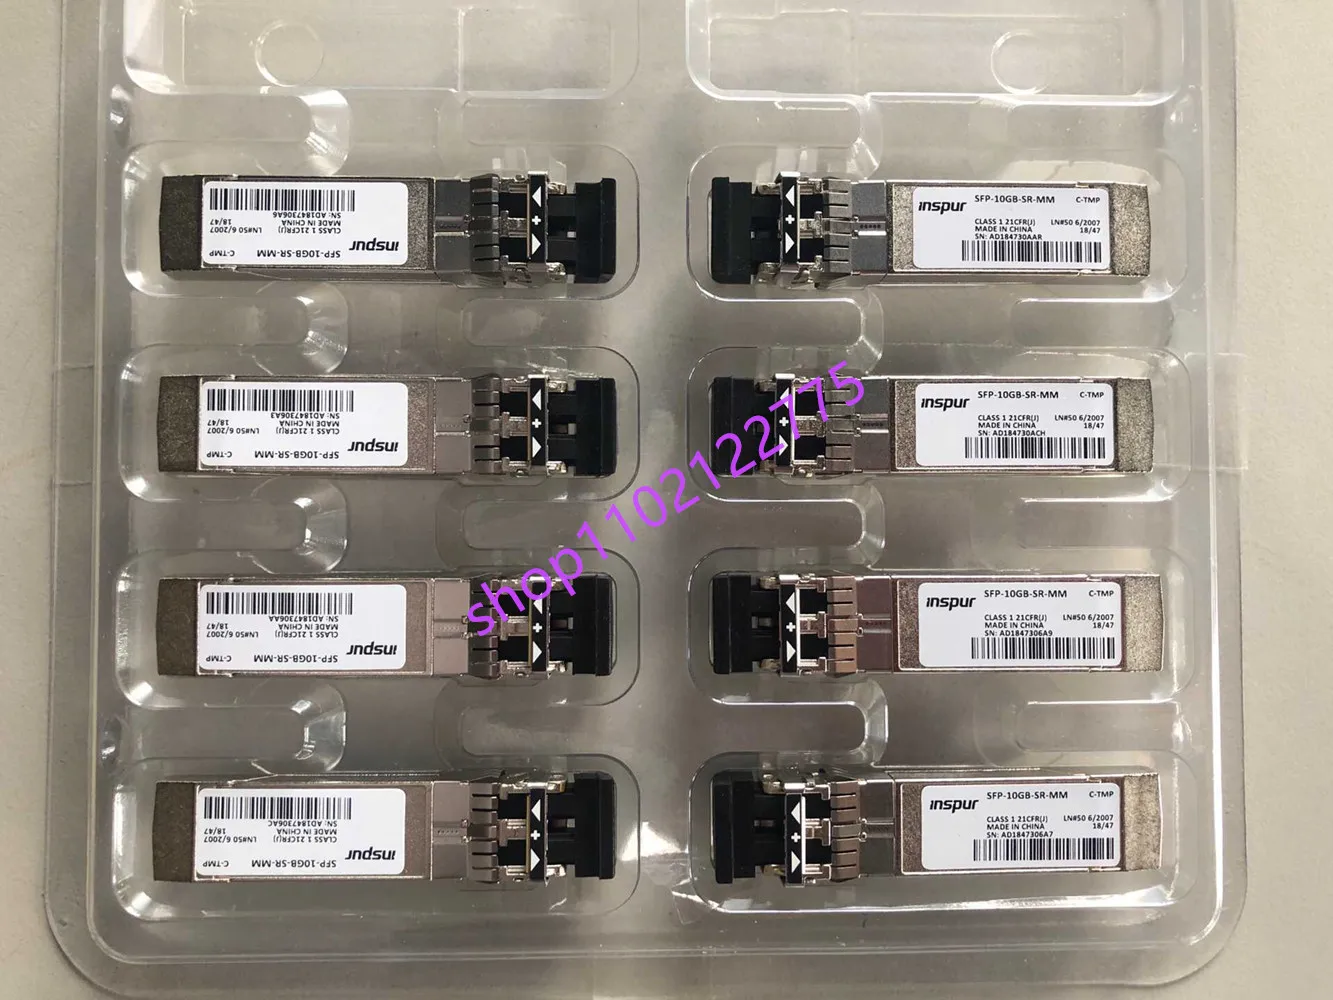 Enlarge inspur sfp 10gb SFP-10GB-SR-MM inspur 10g sr 850nm sfp Network adapter Switch Optical fiber module inspur 10g sfp/inspur sfp